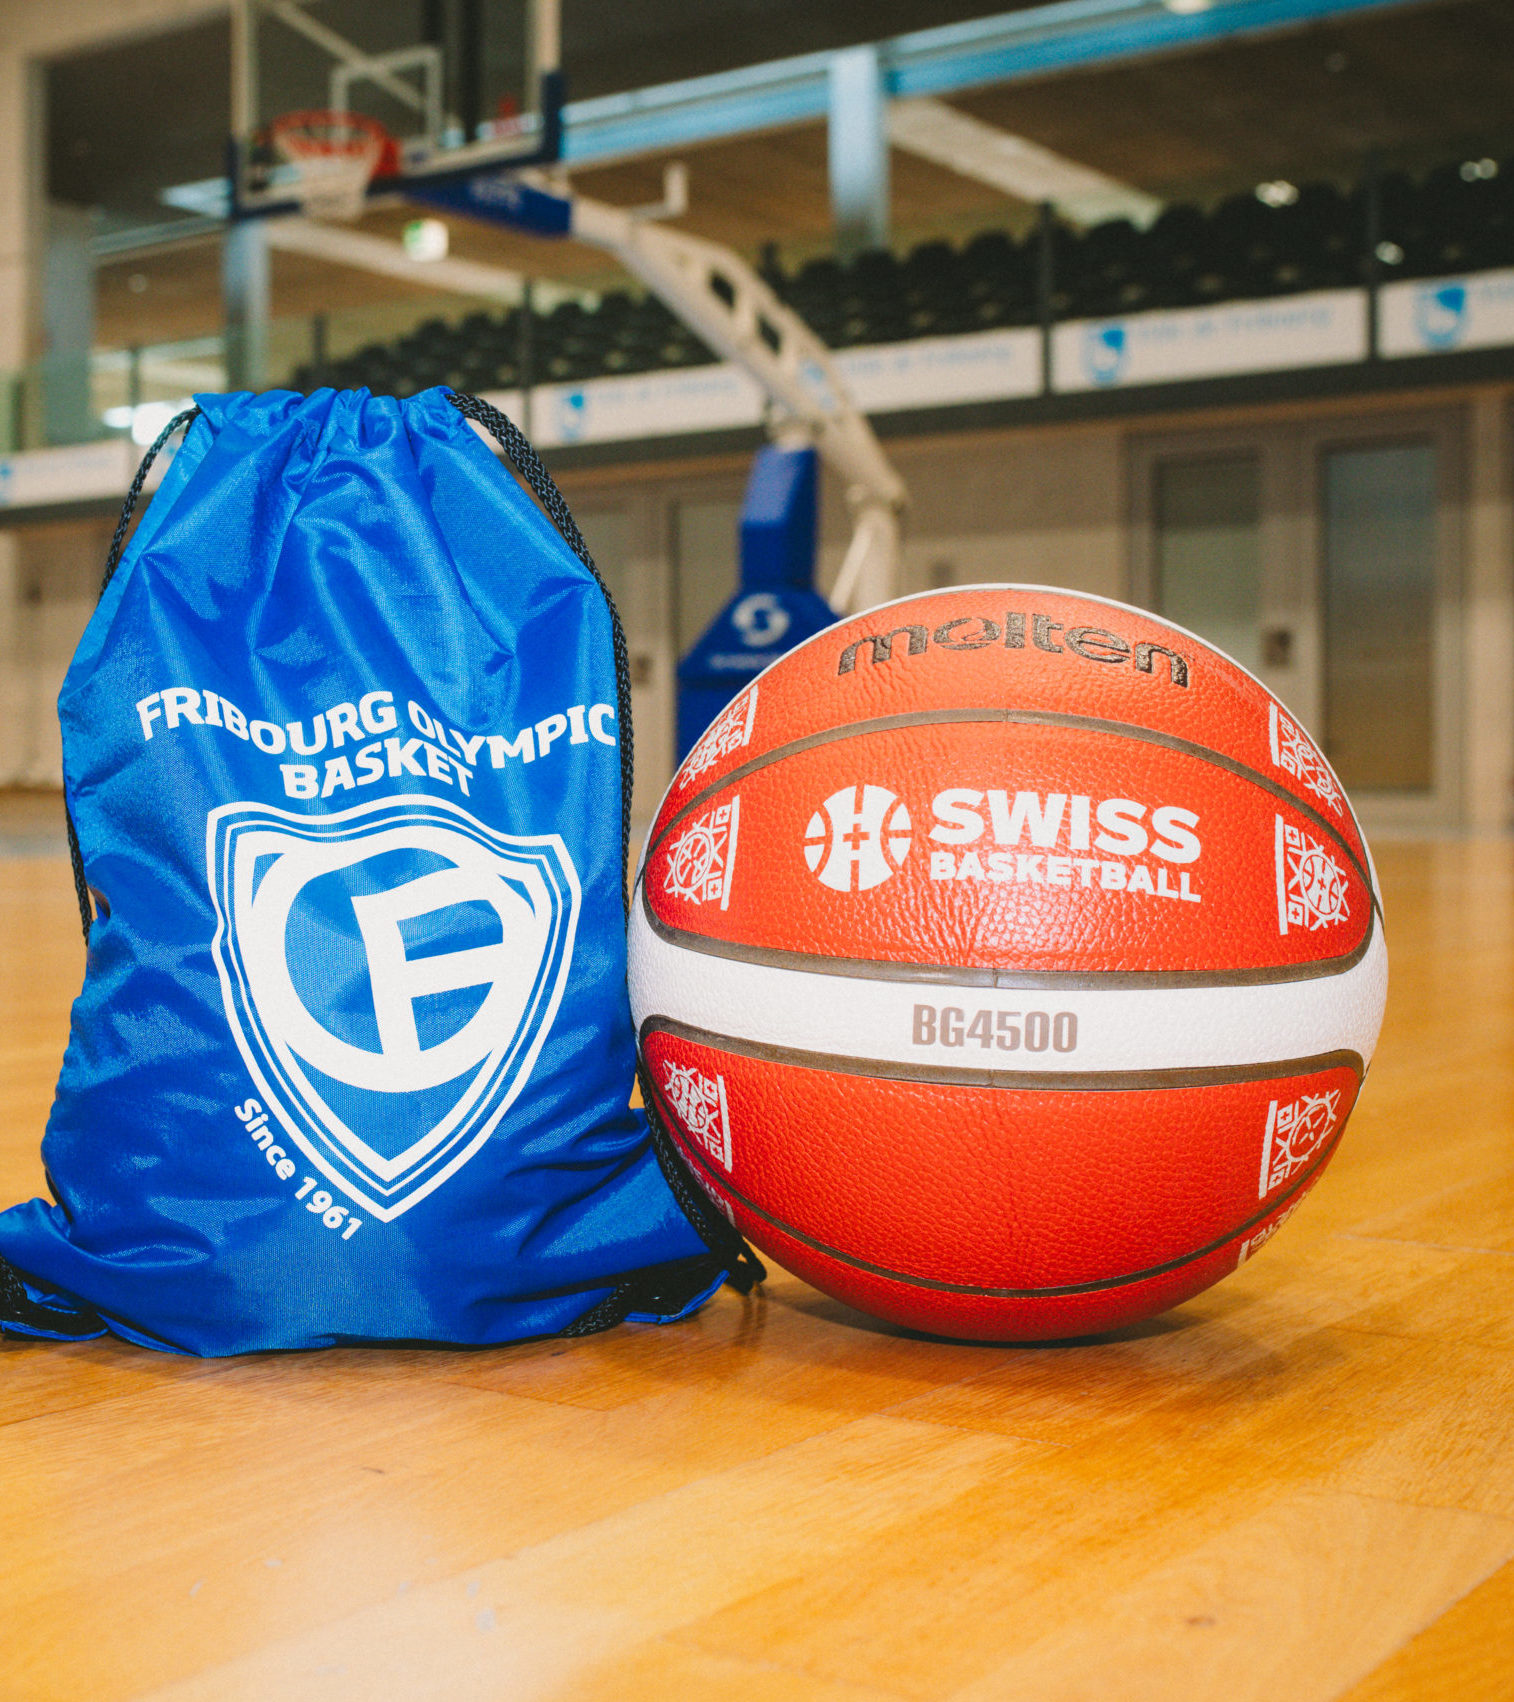 Mini ballon de Basketball - Fribourg Olympic Basket